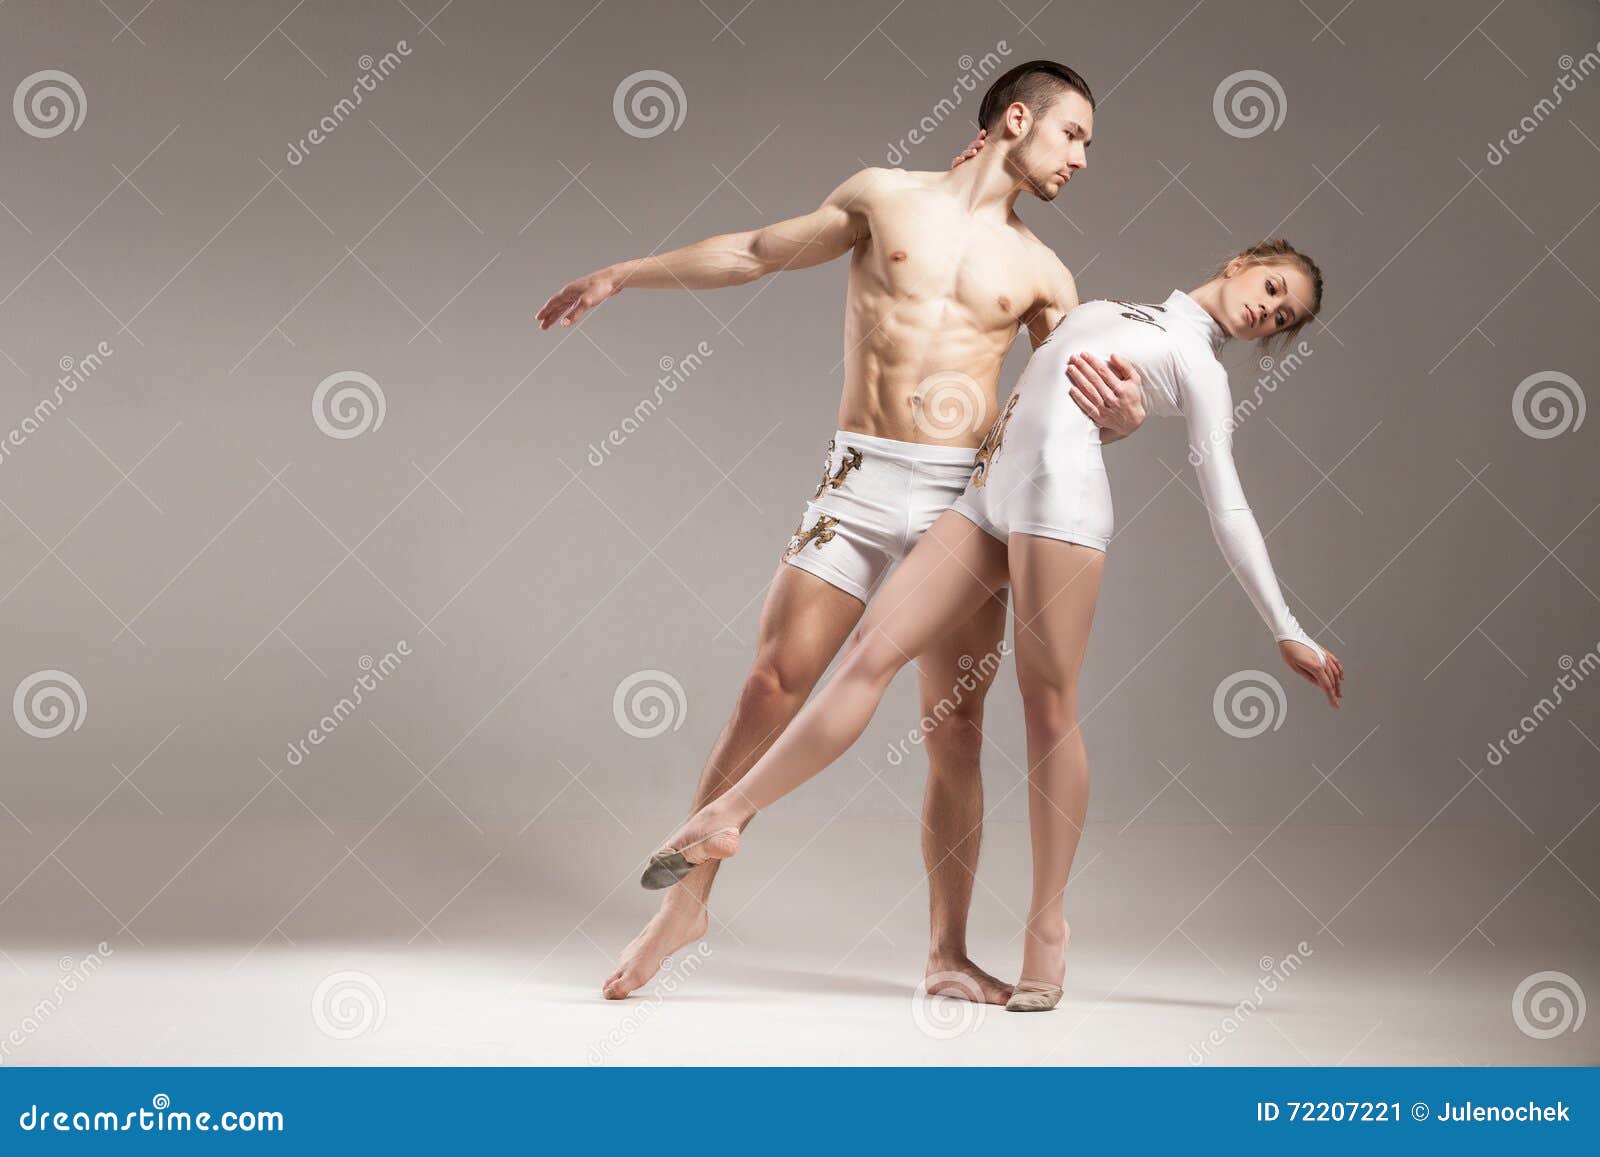 Gymnastic Couple Dancing Stock Image Image Of Blonde 72207221